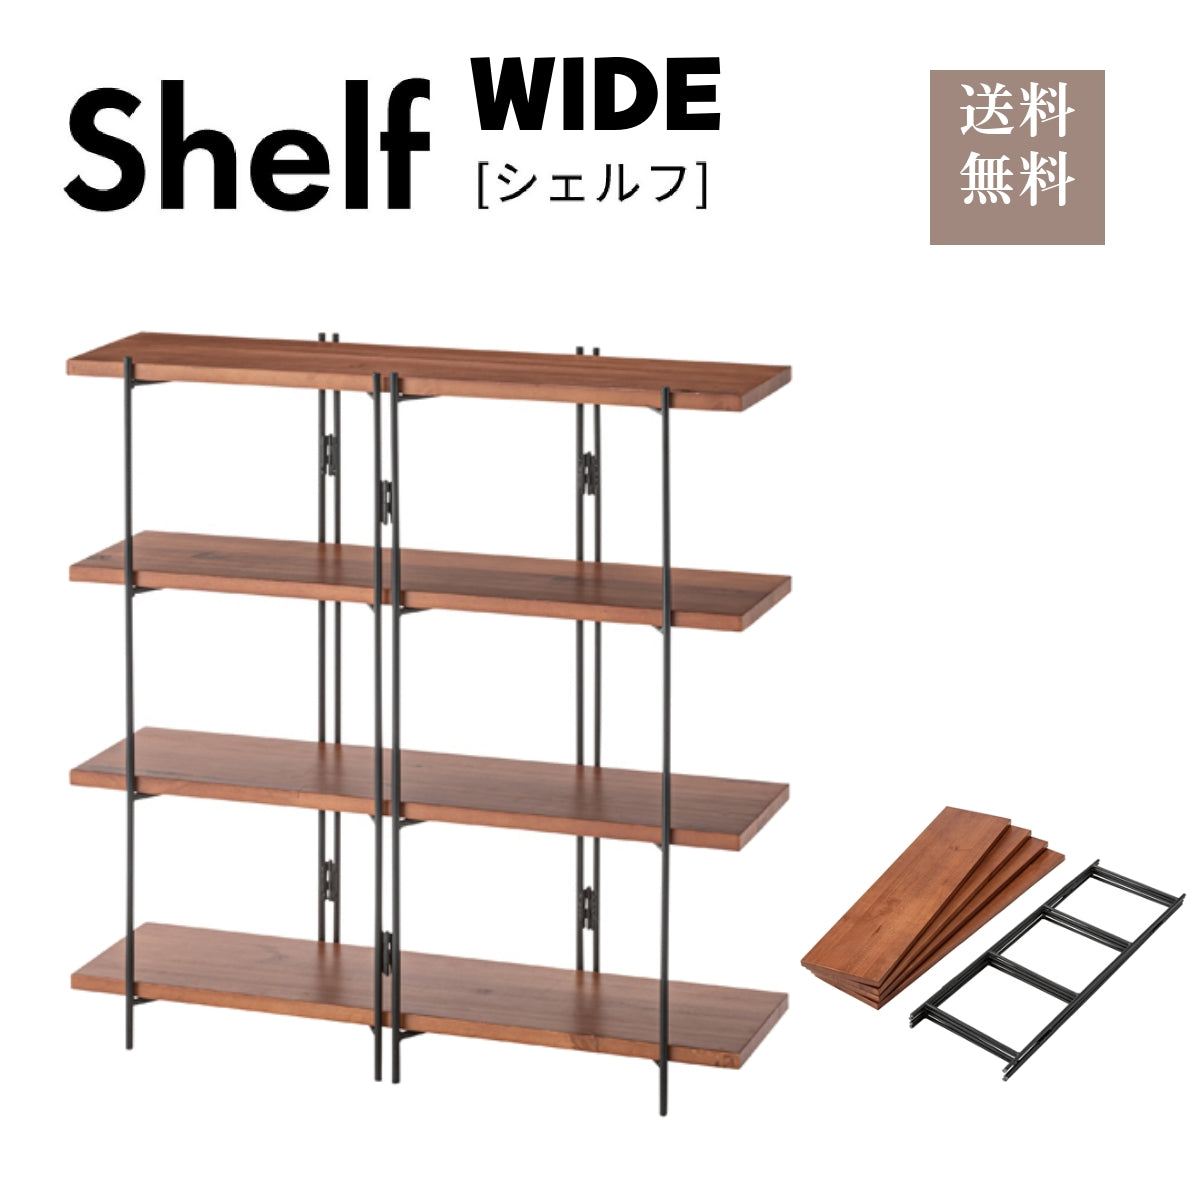 Room Essence Shelf Wide GT-112